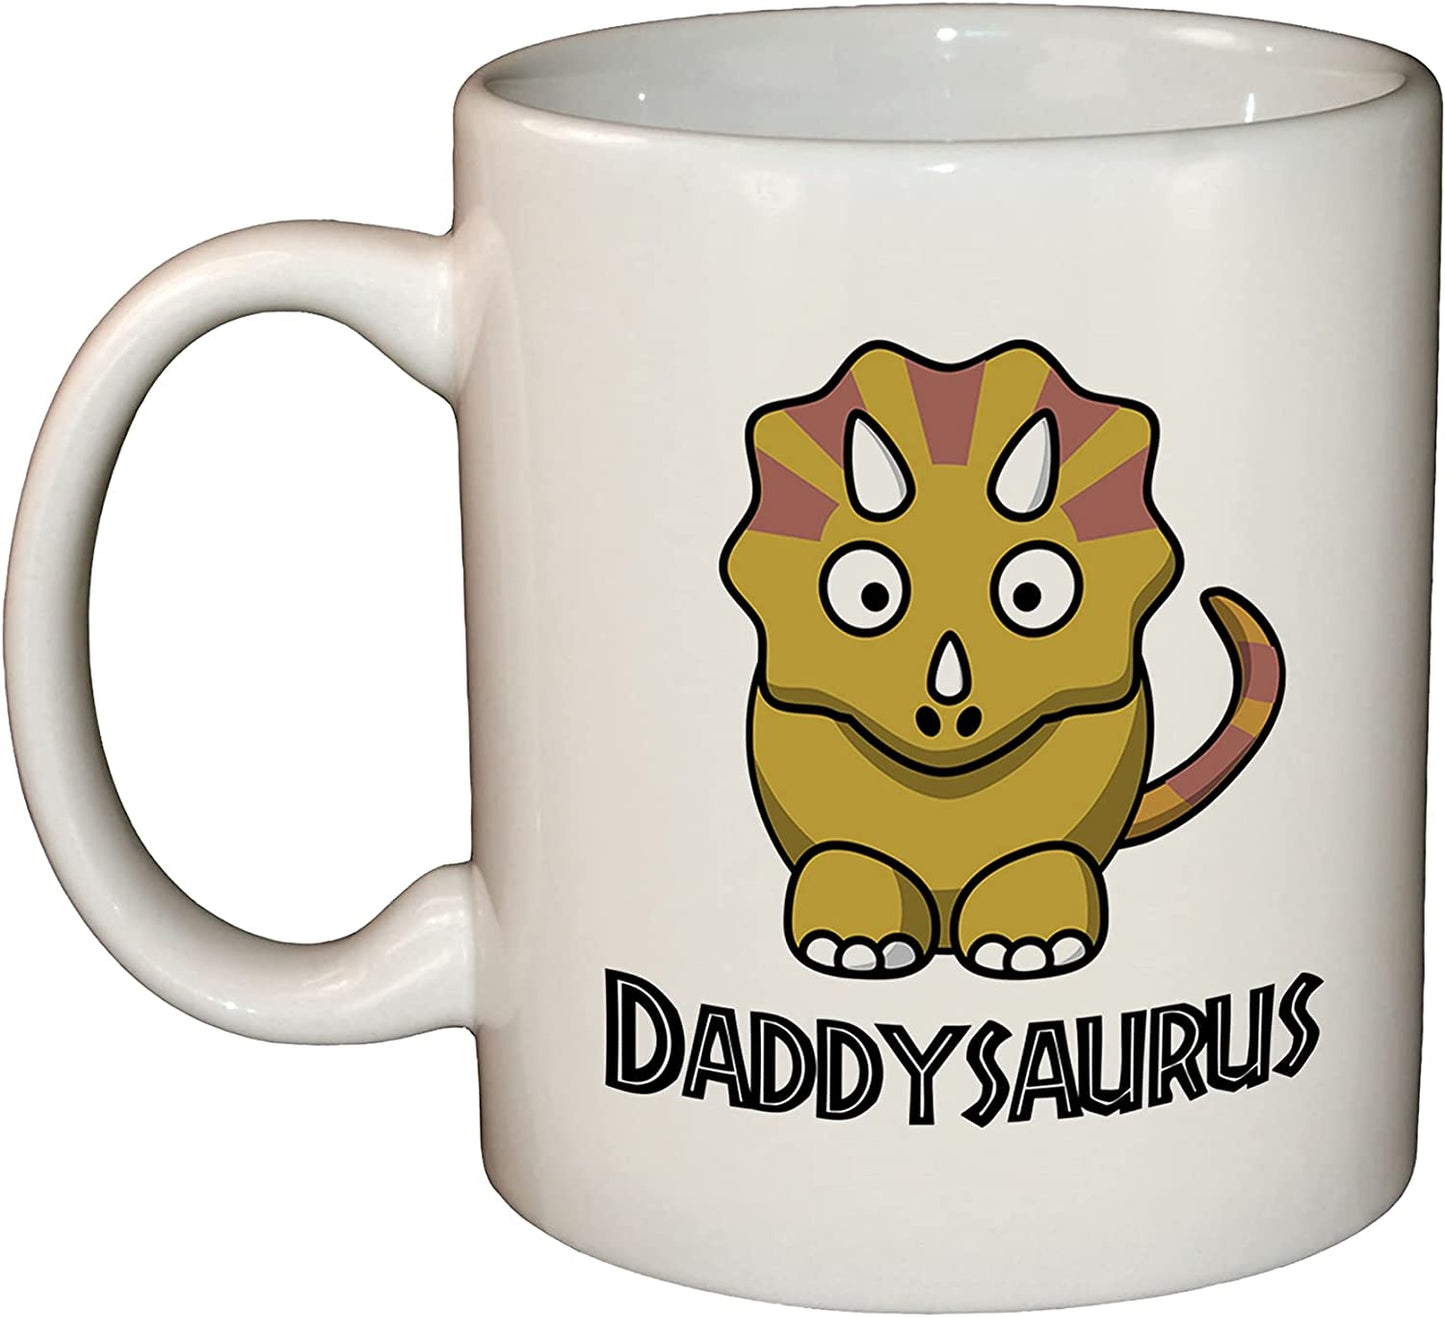 Mummysaurus / Daddysaurus Novelty Coffee Mug for Parents Ceramic